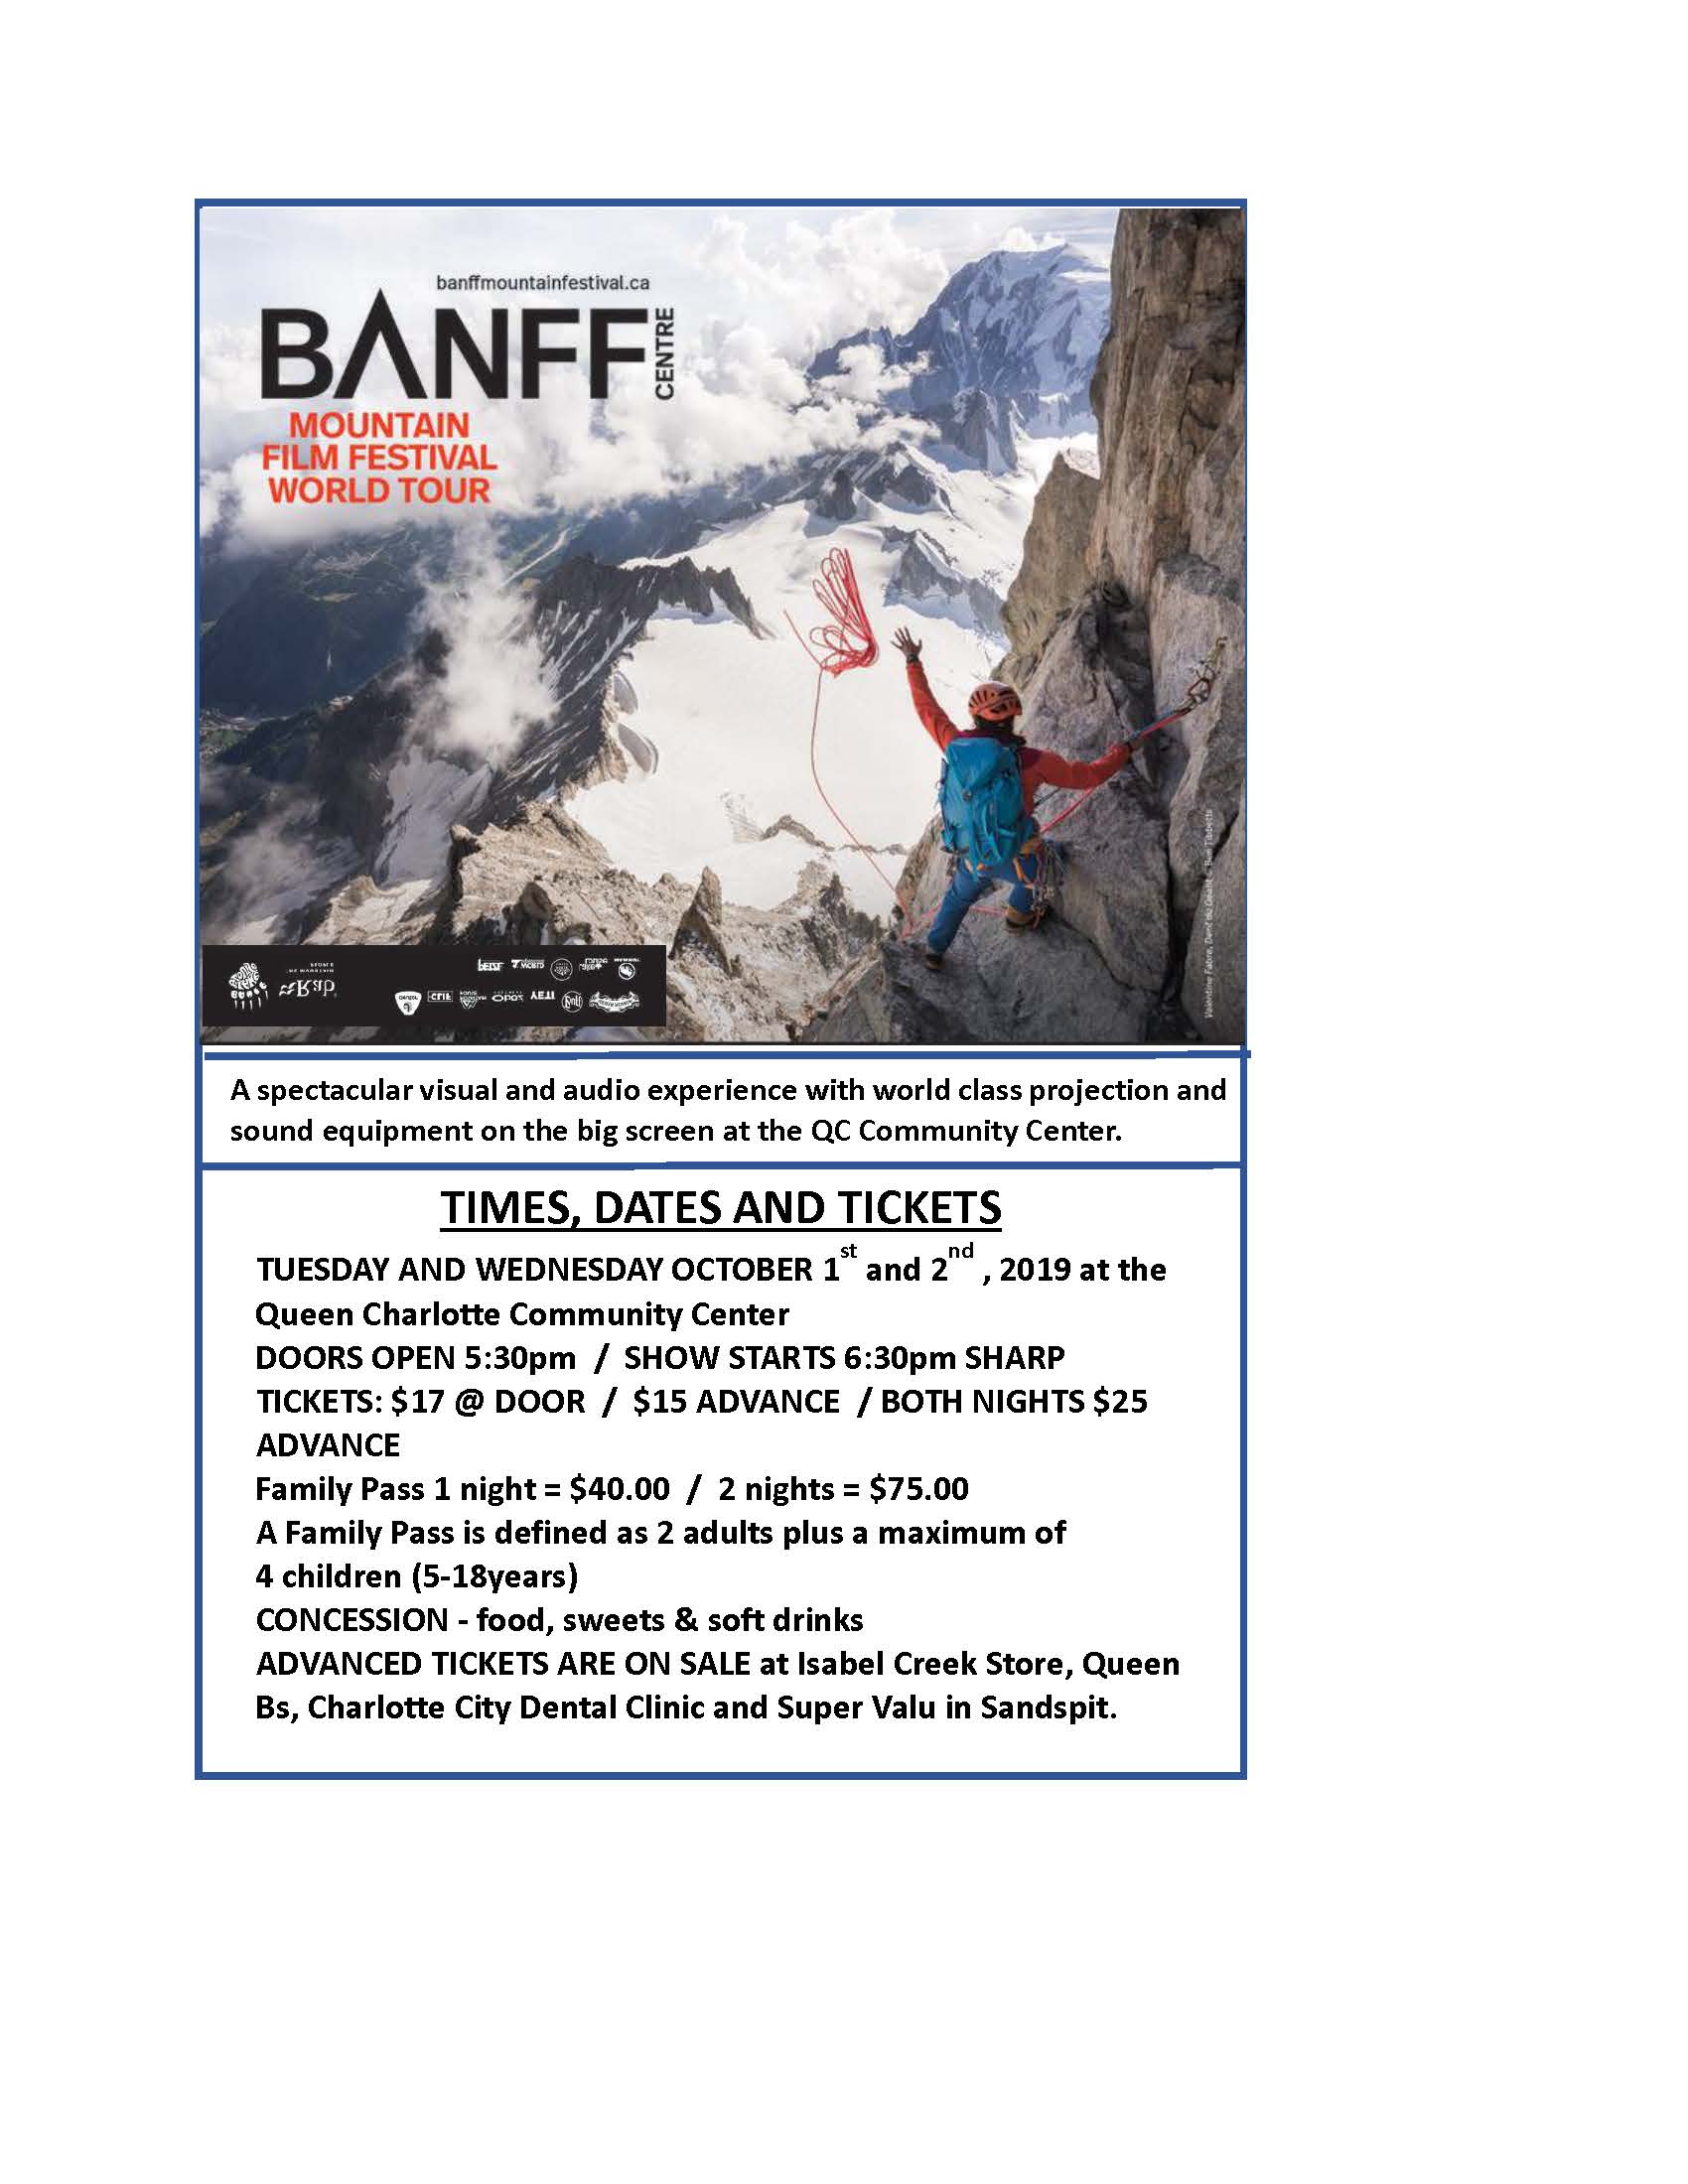 Banff World Tour Film Festival